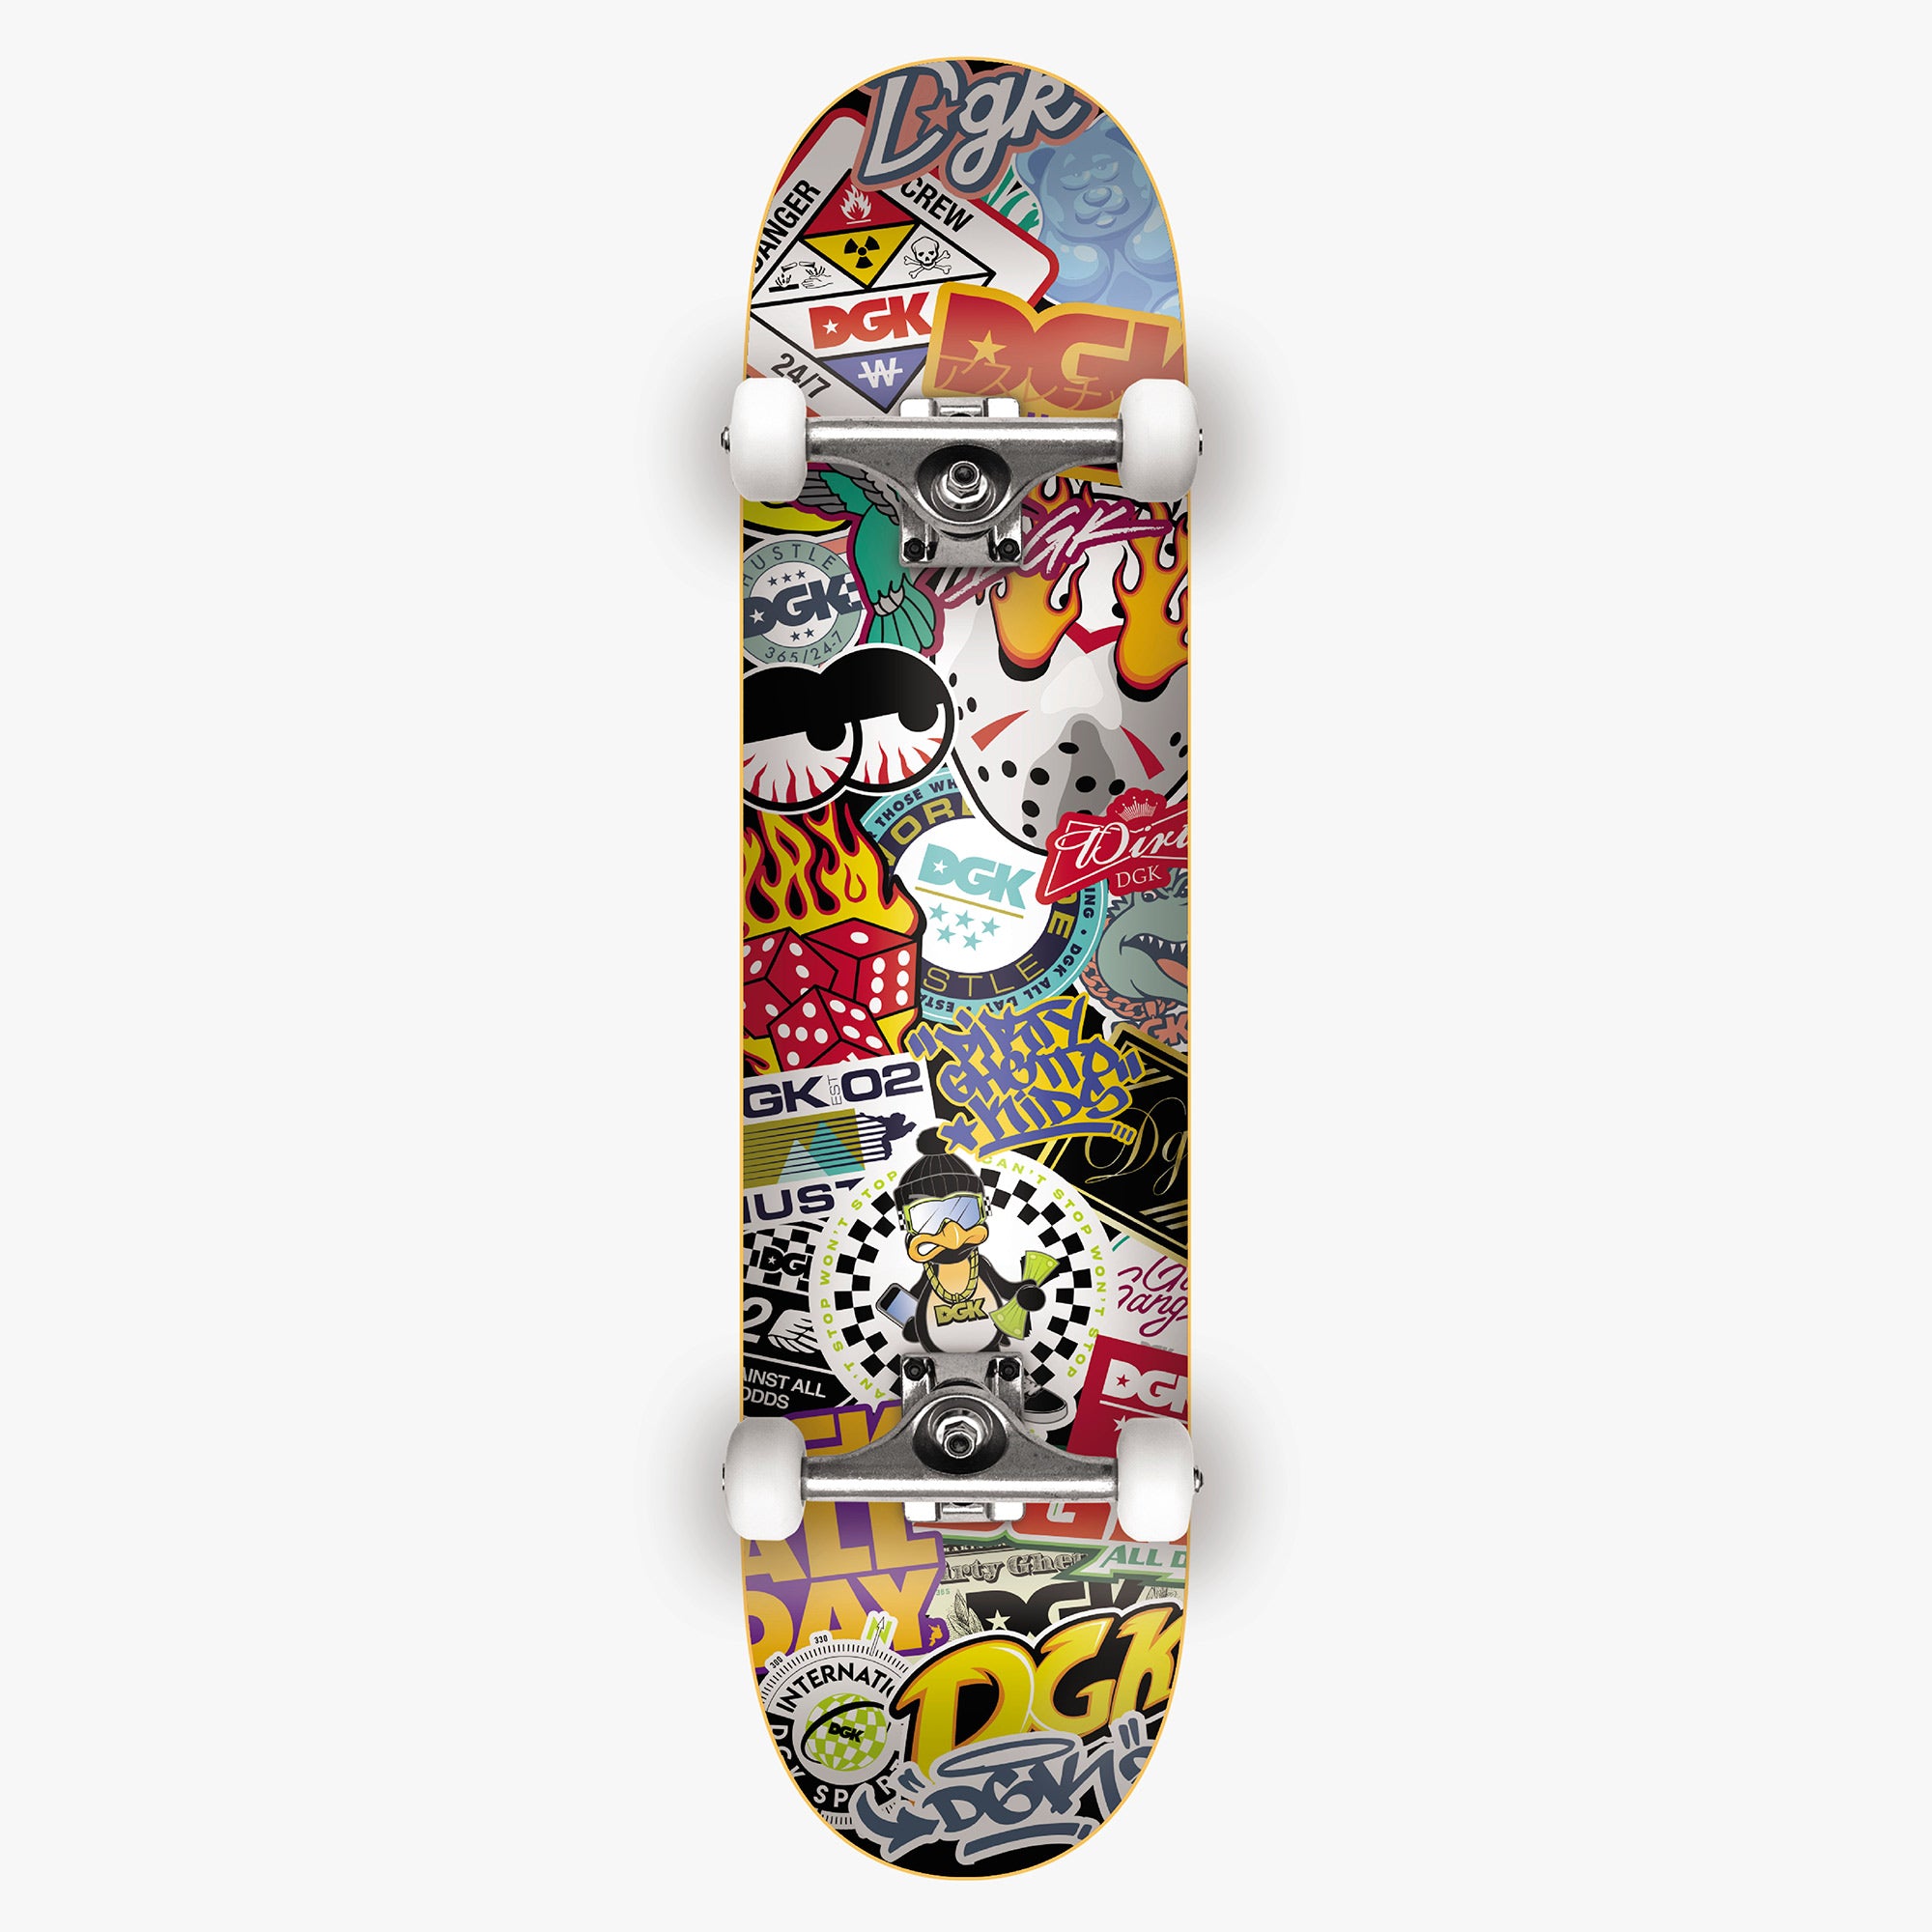 dgk skateboard decks